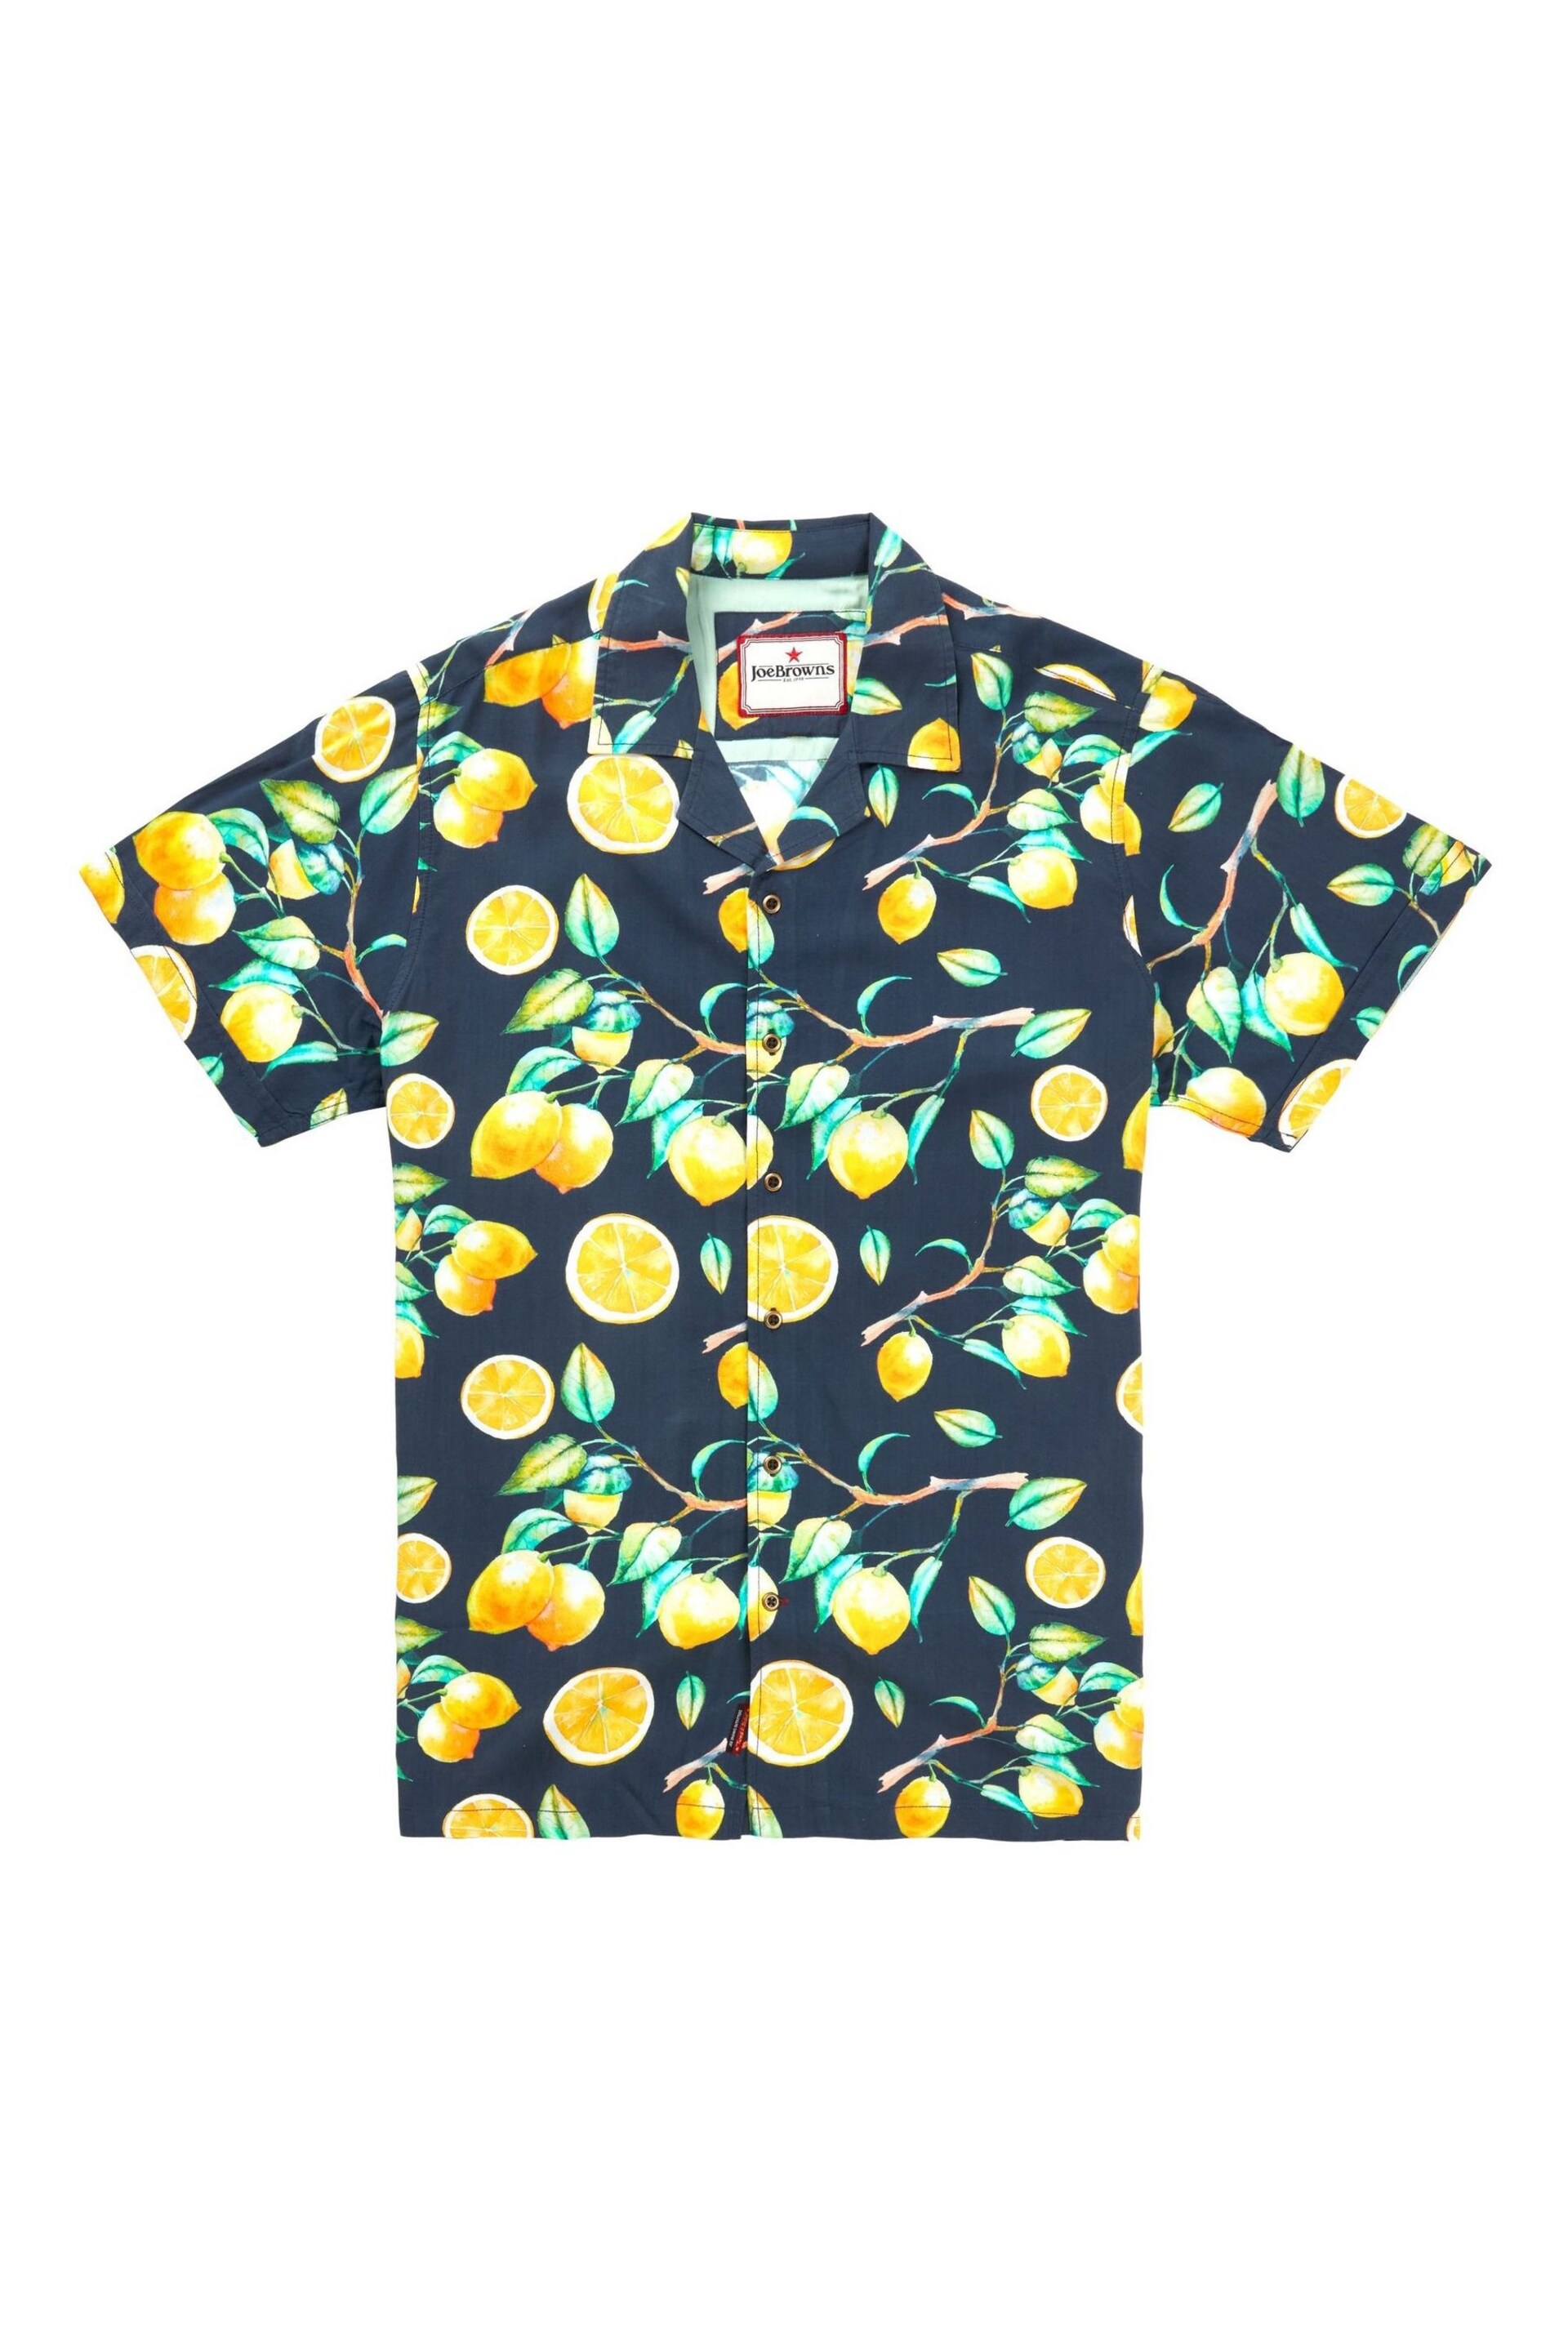 Joe Browns Black Lemon Printed Short Sleeve Open Flat Collar Shirt - Image 5 of 5